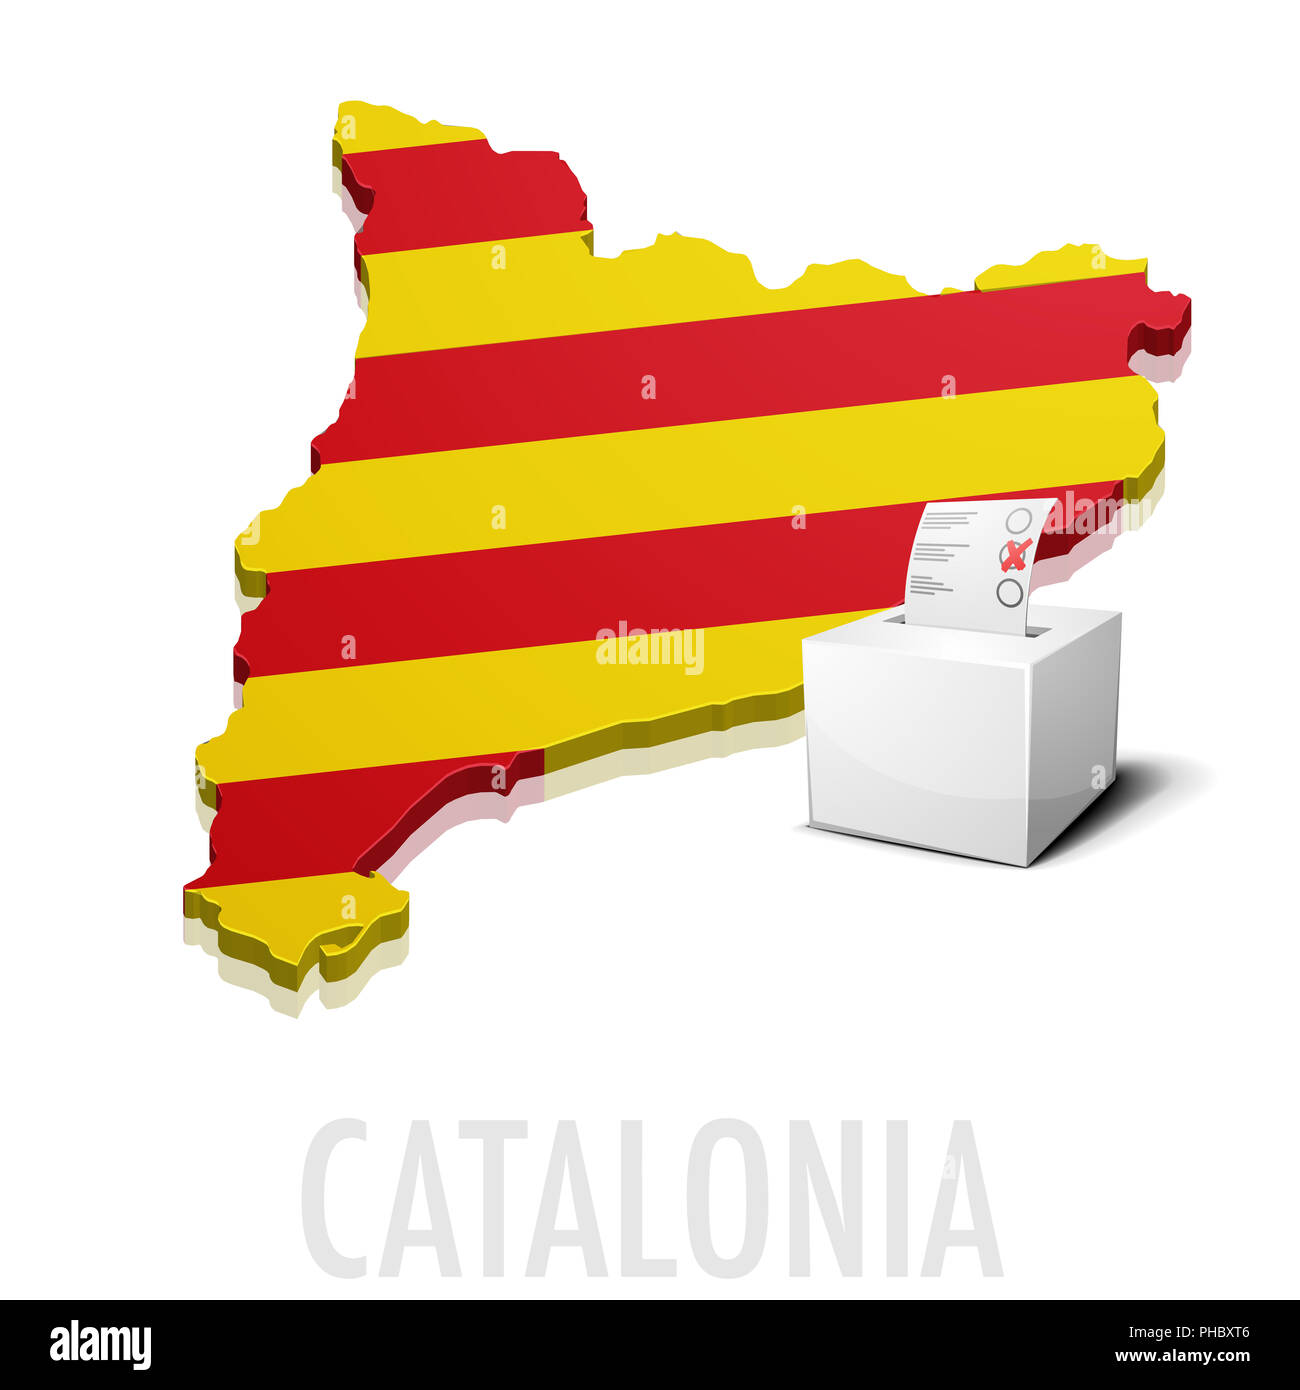 Ballotbox Catalogna mappa Foto Stock